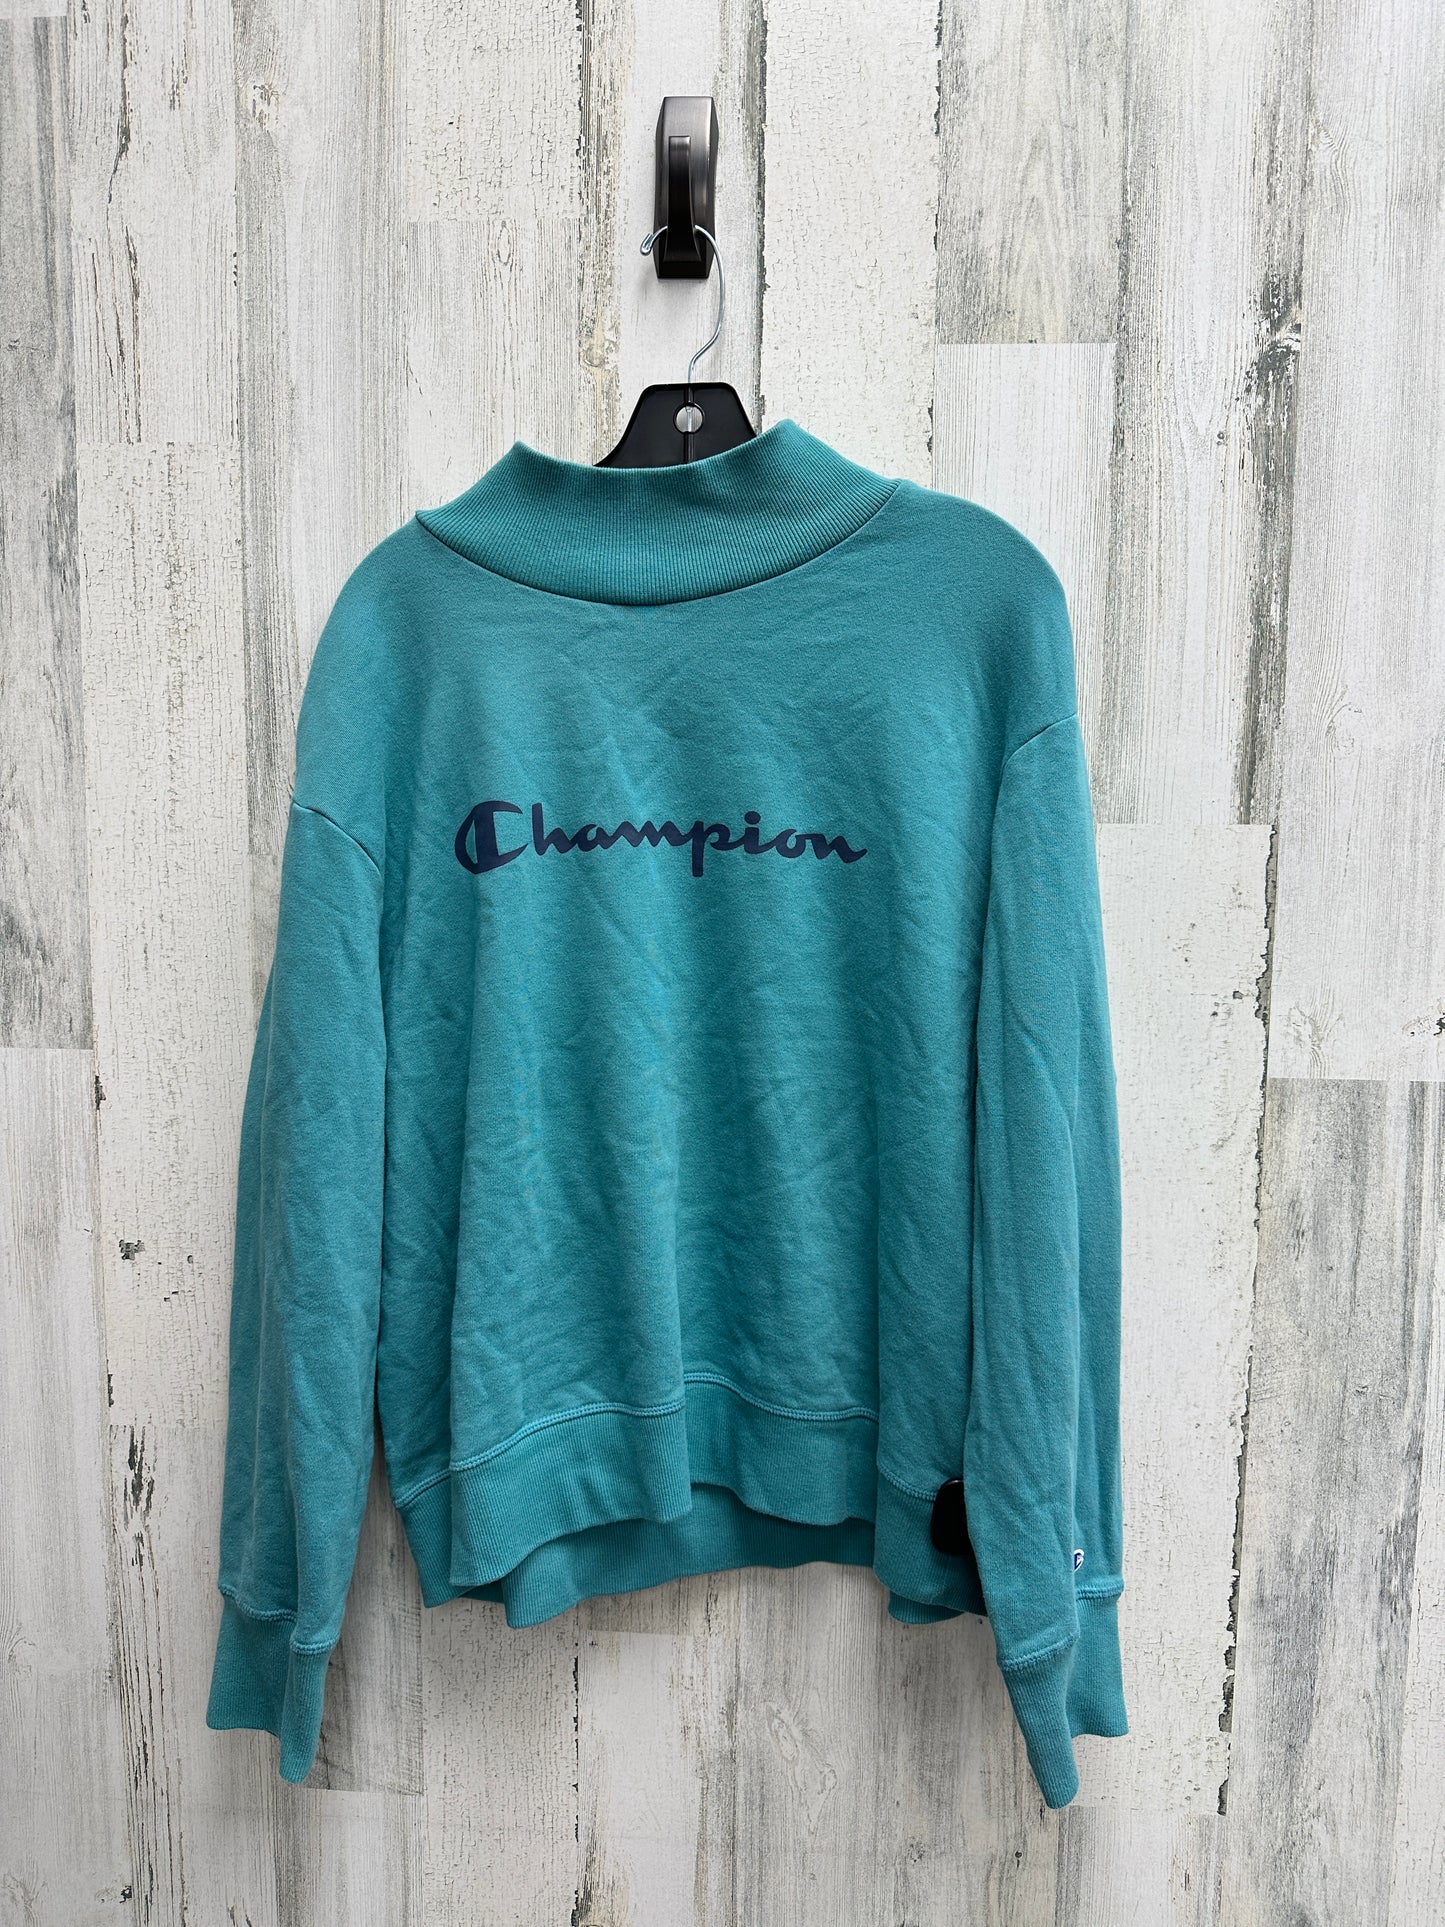 Sweatshirt Crewneck By Champion  Size: Xl